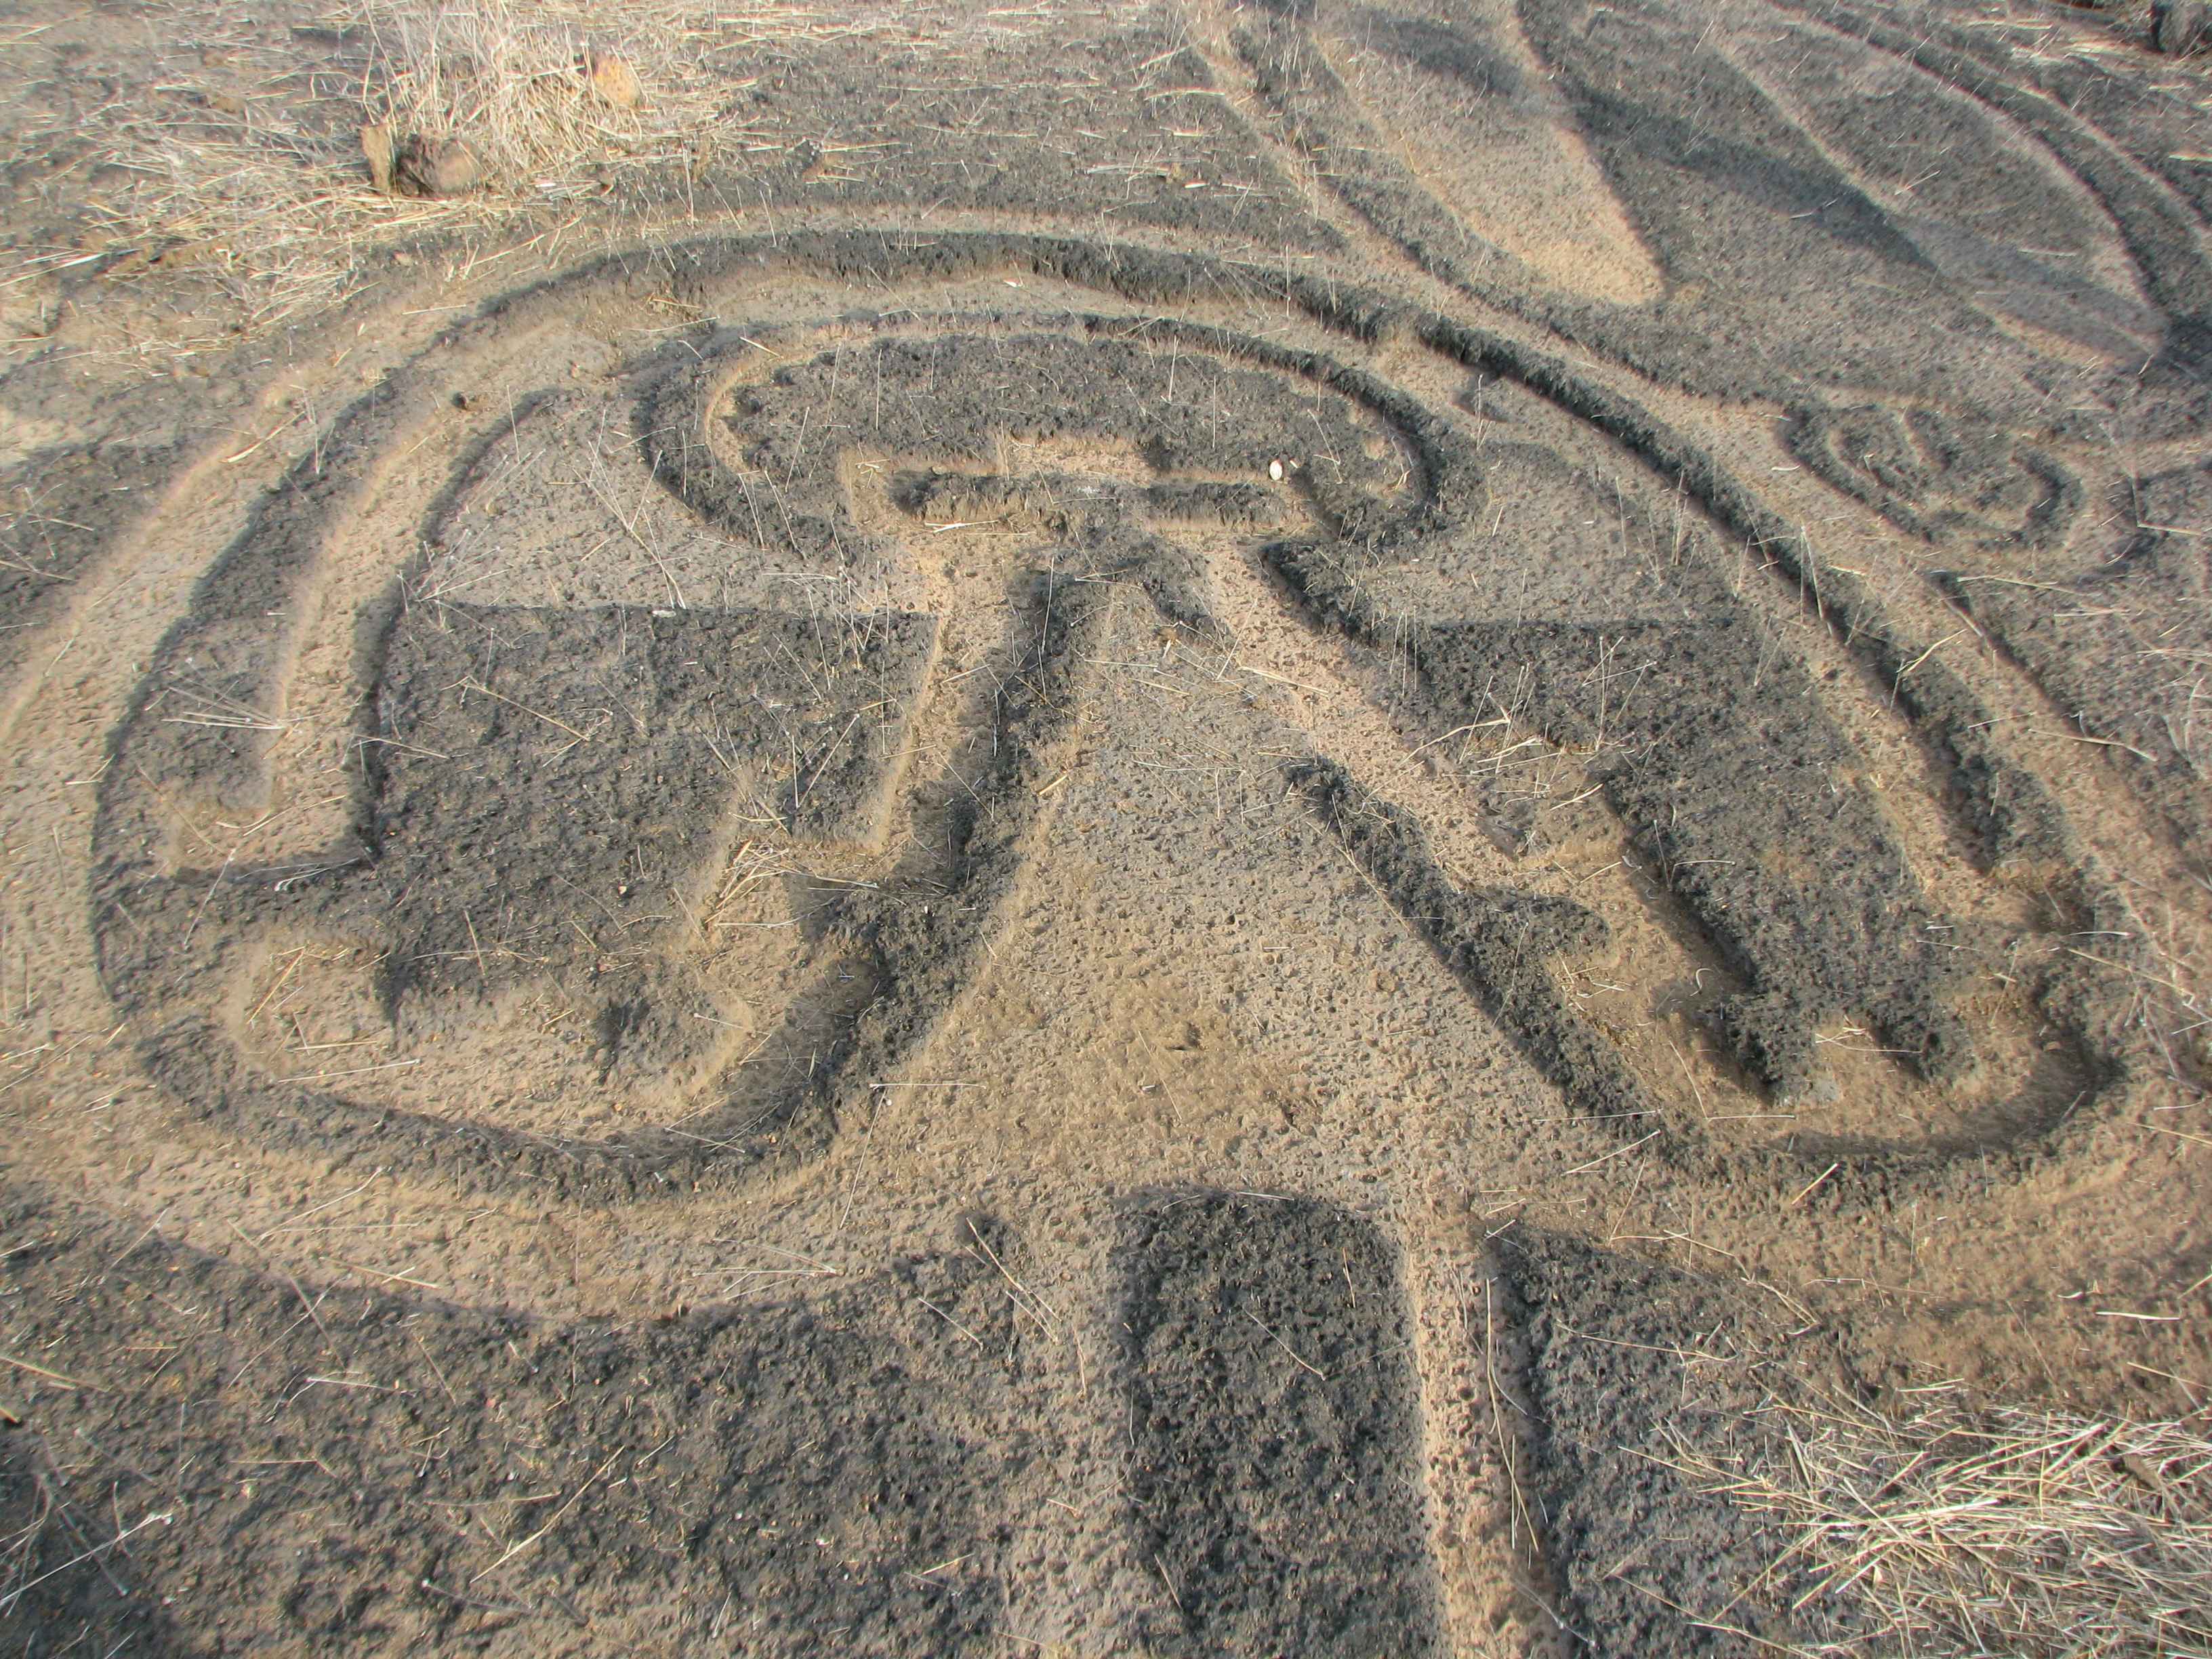 Neolithic rock art sites found in Maharashtra